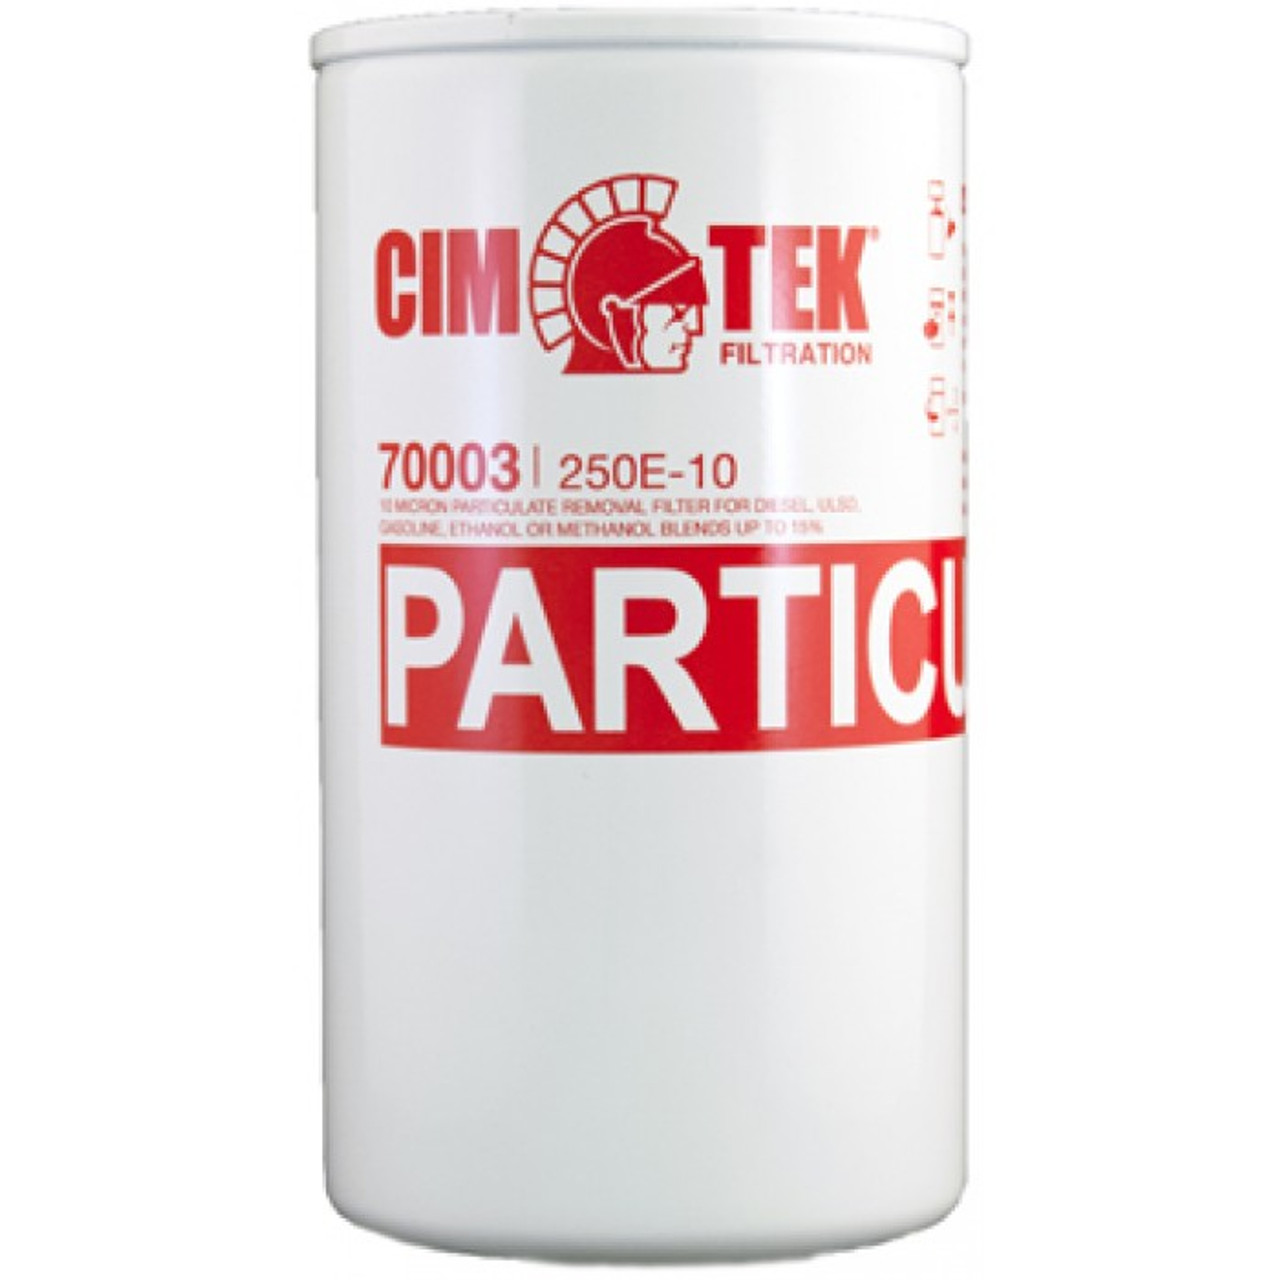 70003 | 250E-10 Particulate Fuel Filter